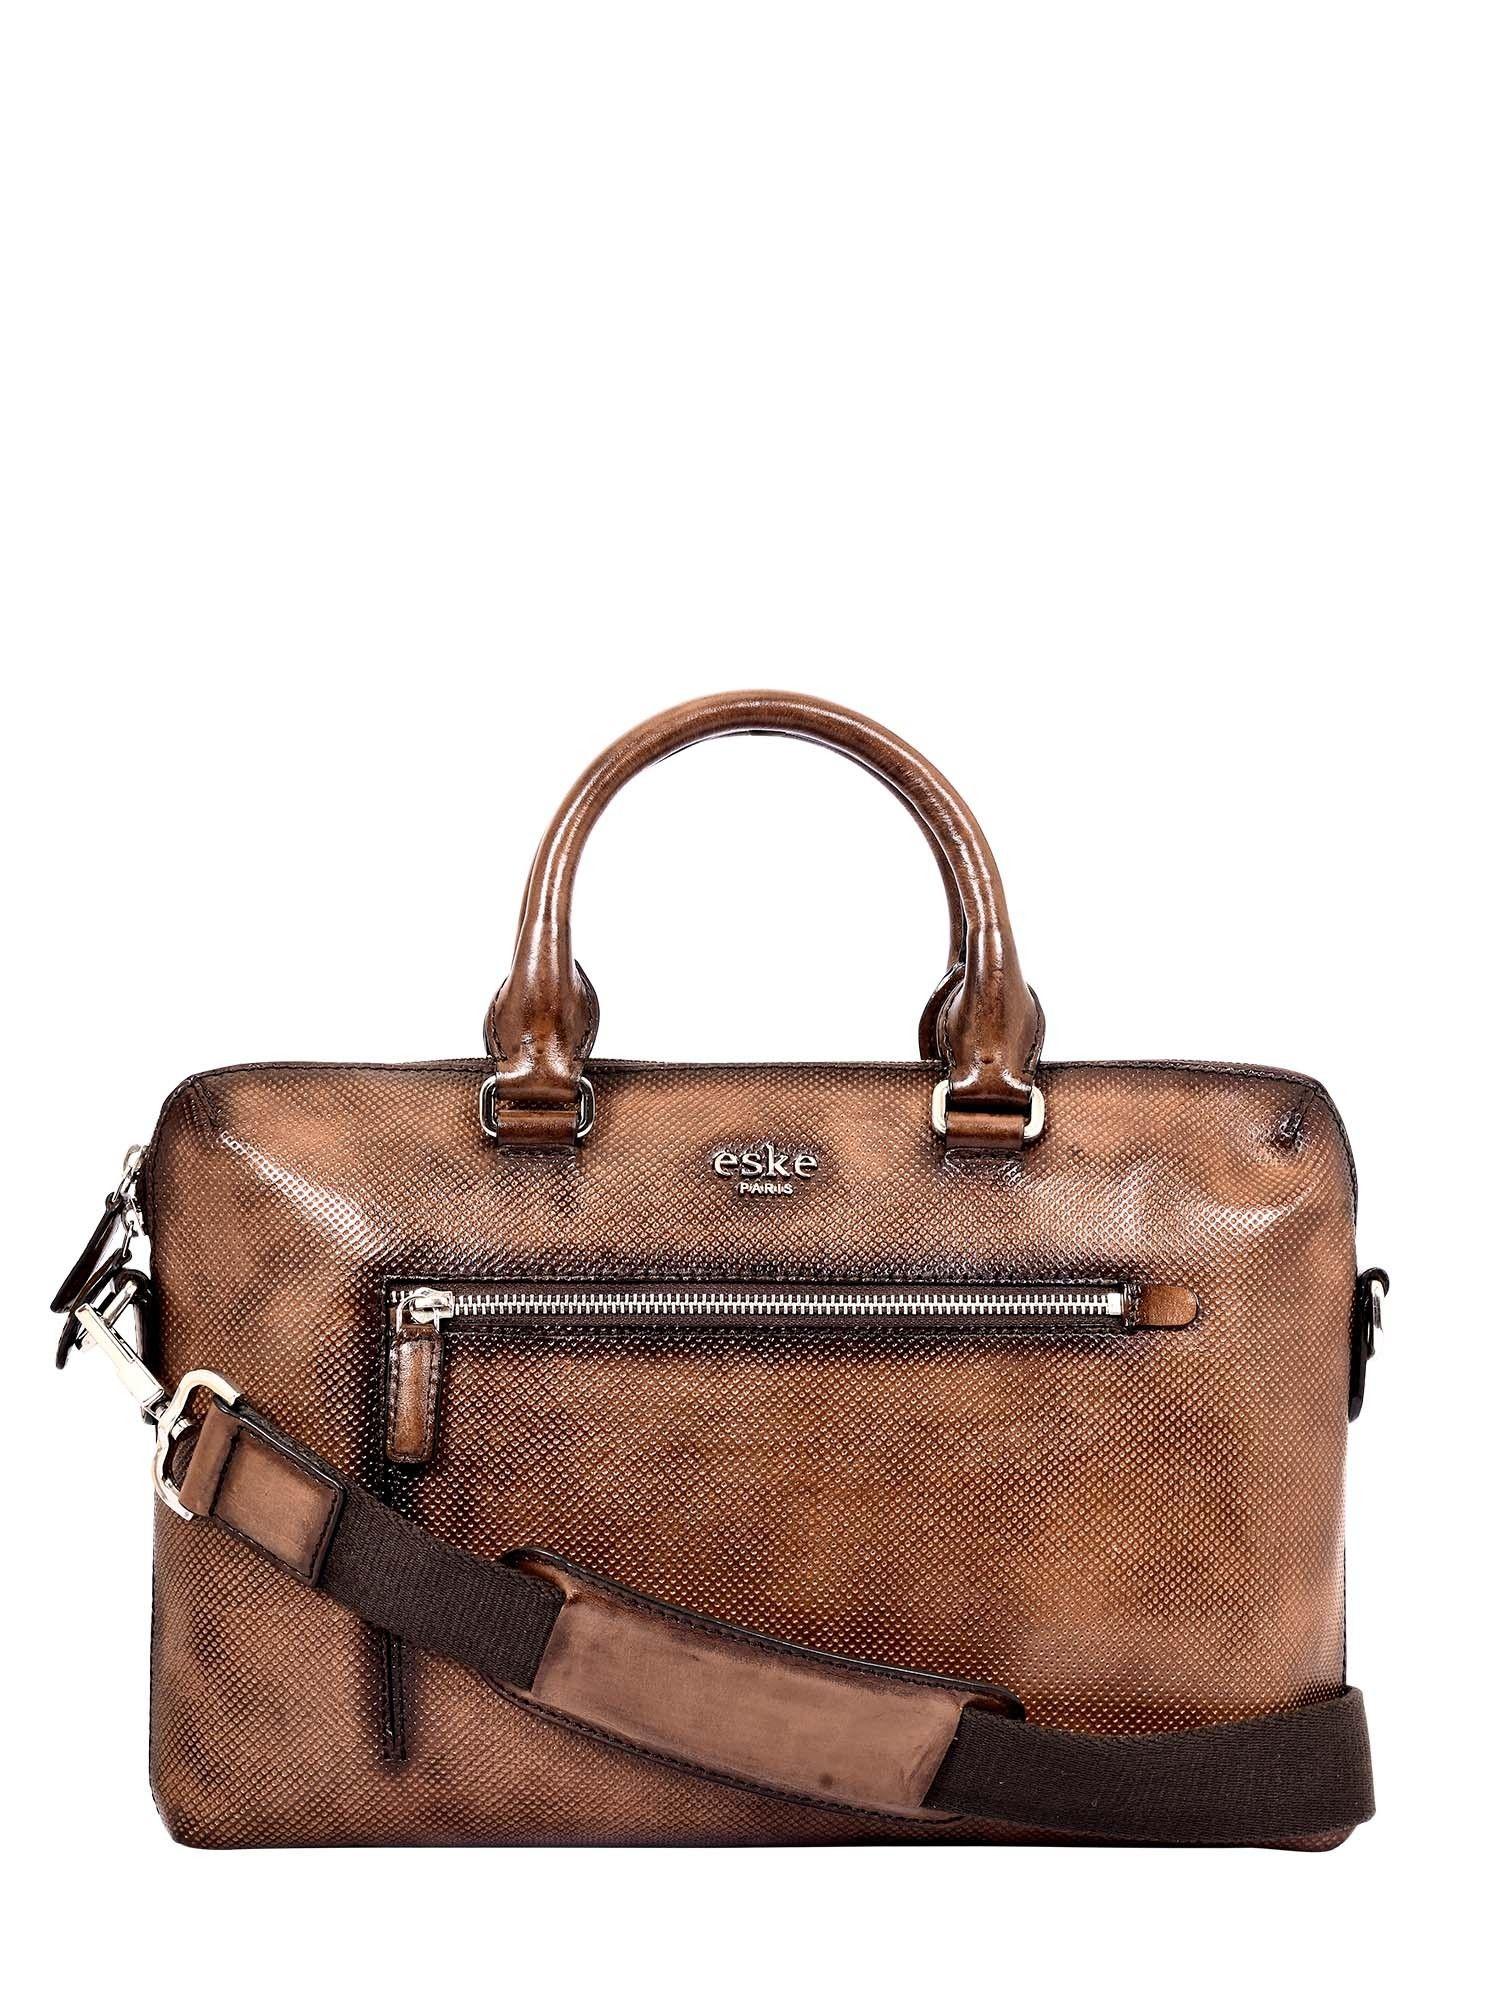 indulf unisex leather laptop bag upto 13, british tan hand-stitched